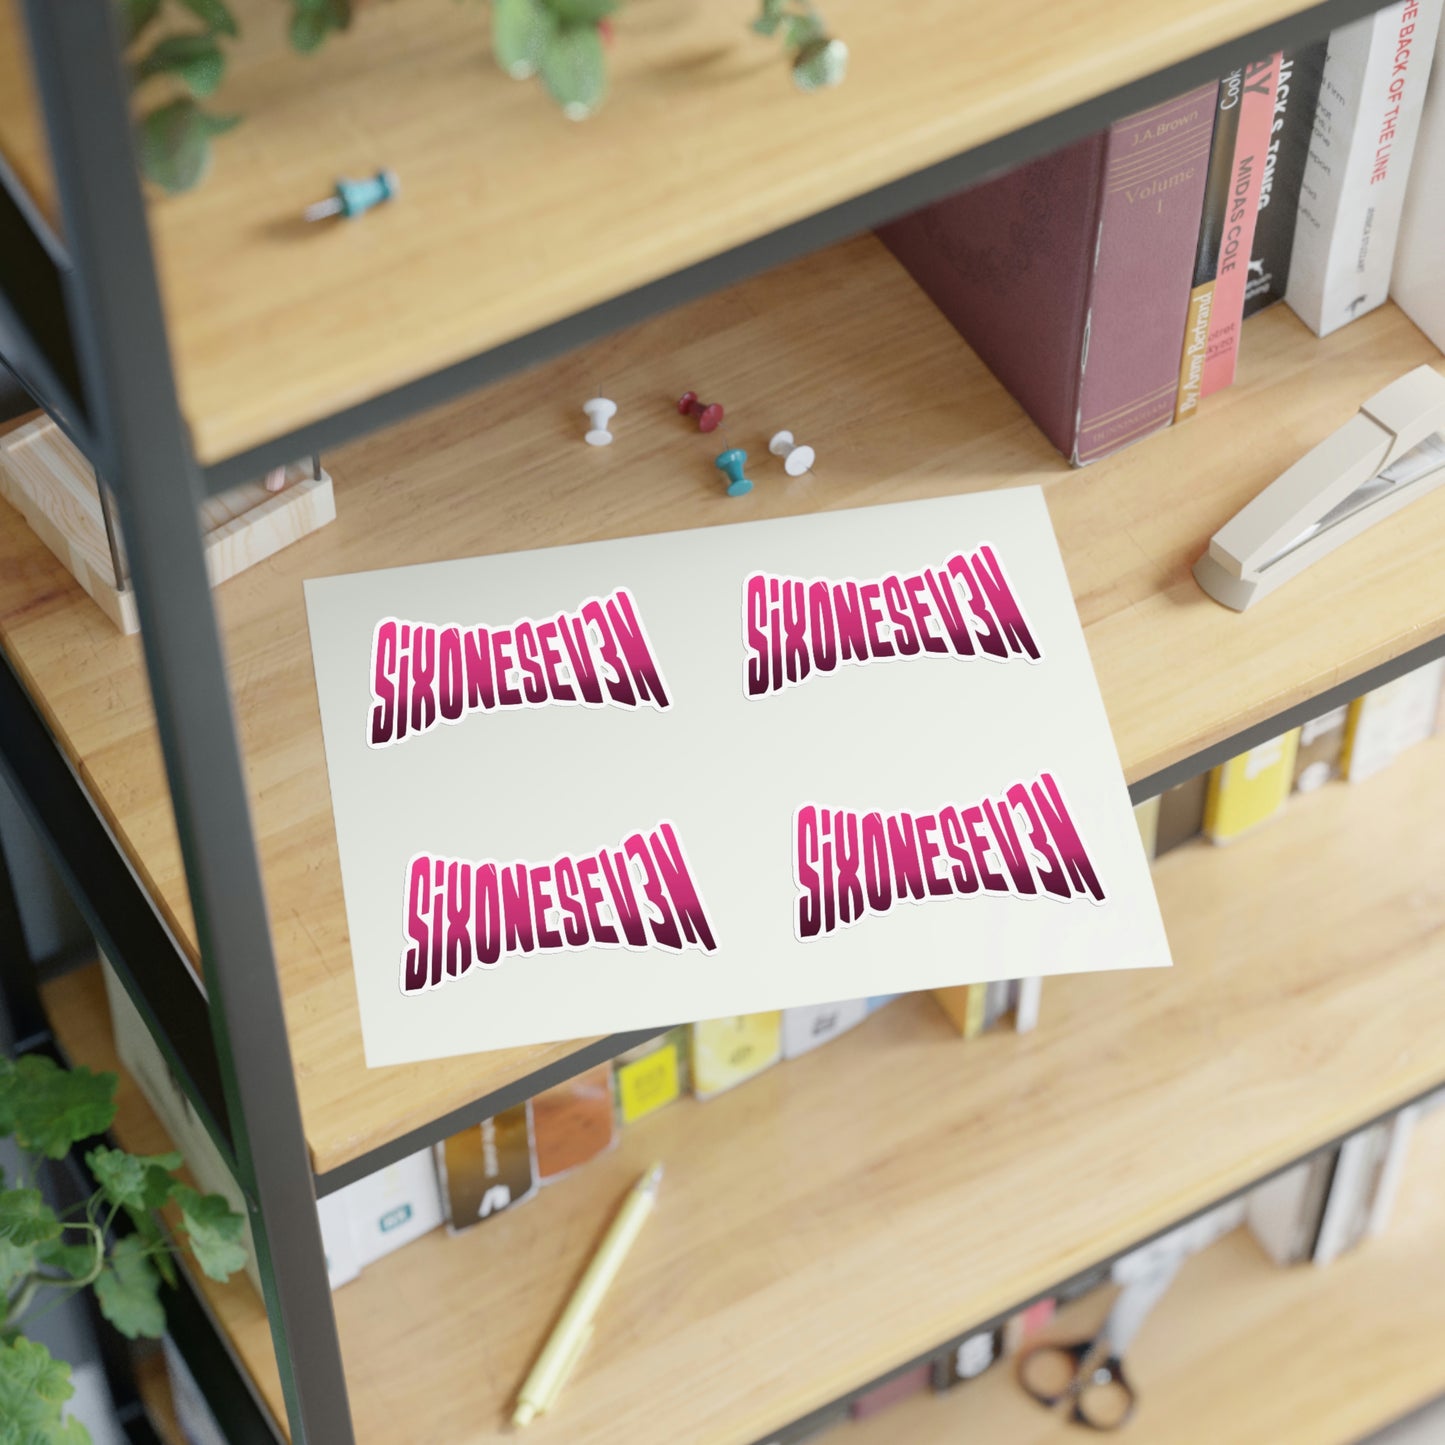 SixOneSev3n Text Sticker Sheets